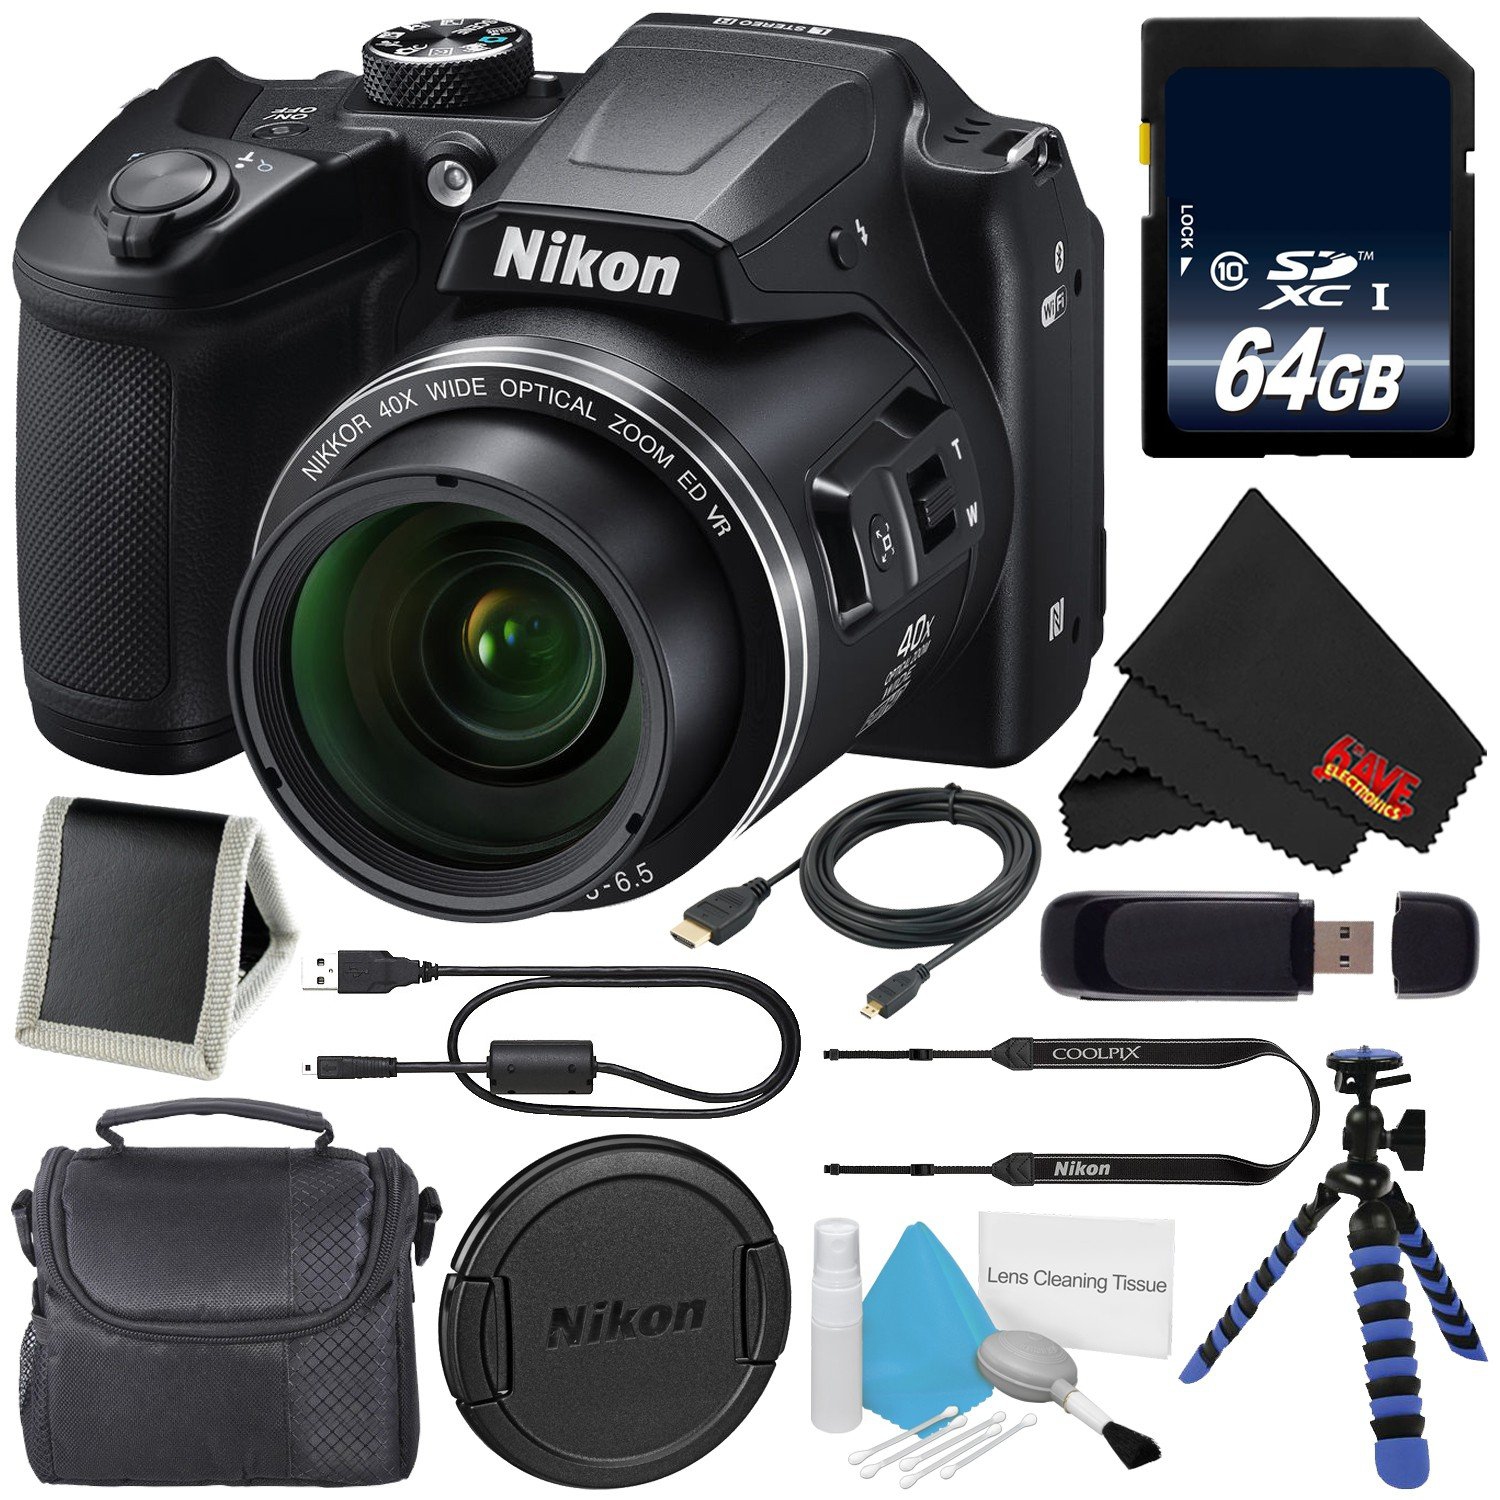 Nikon COOLPIX B500 Digital Camera (Black) 26506 + 64GB SDXC Class 10 Memory Card + Flexible Tripod with Gripping Rubber